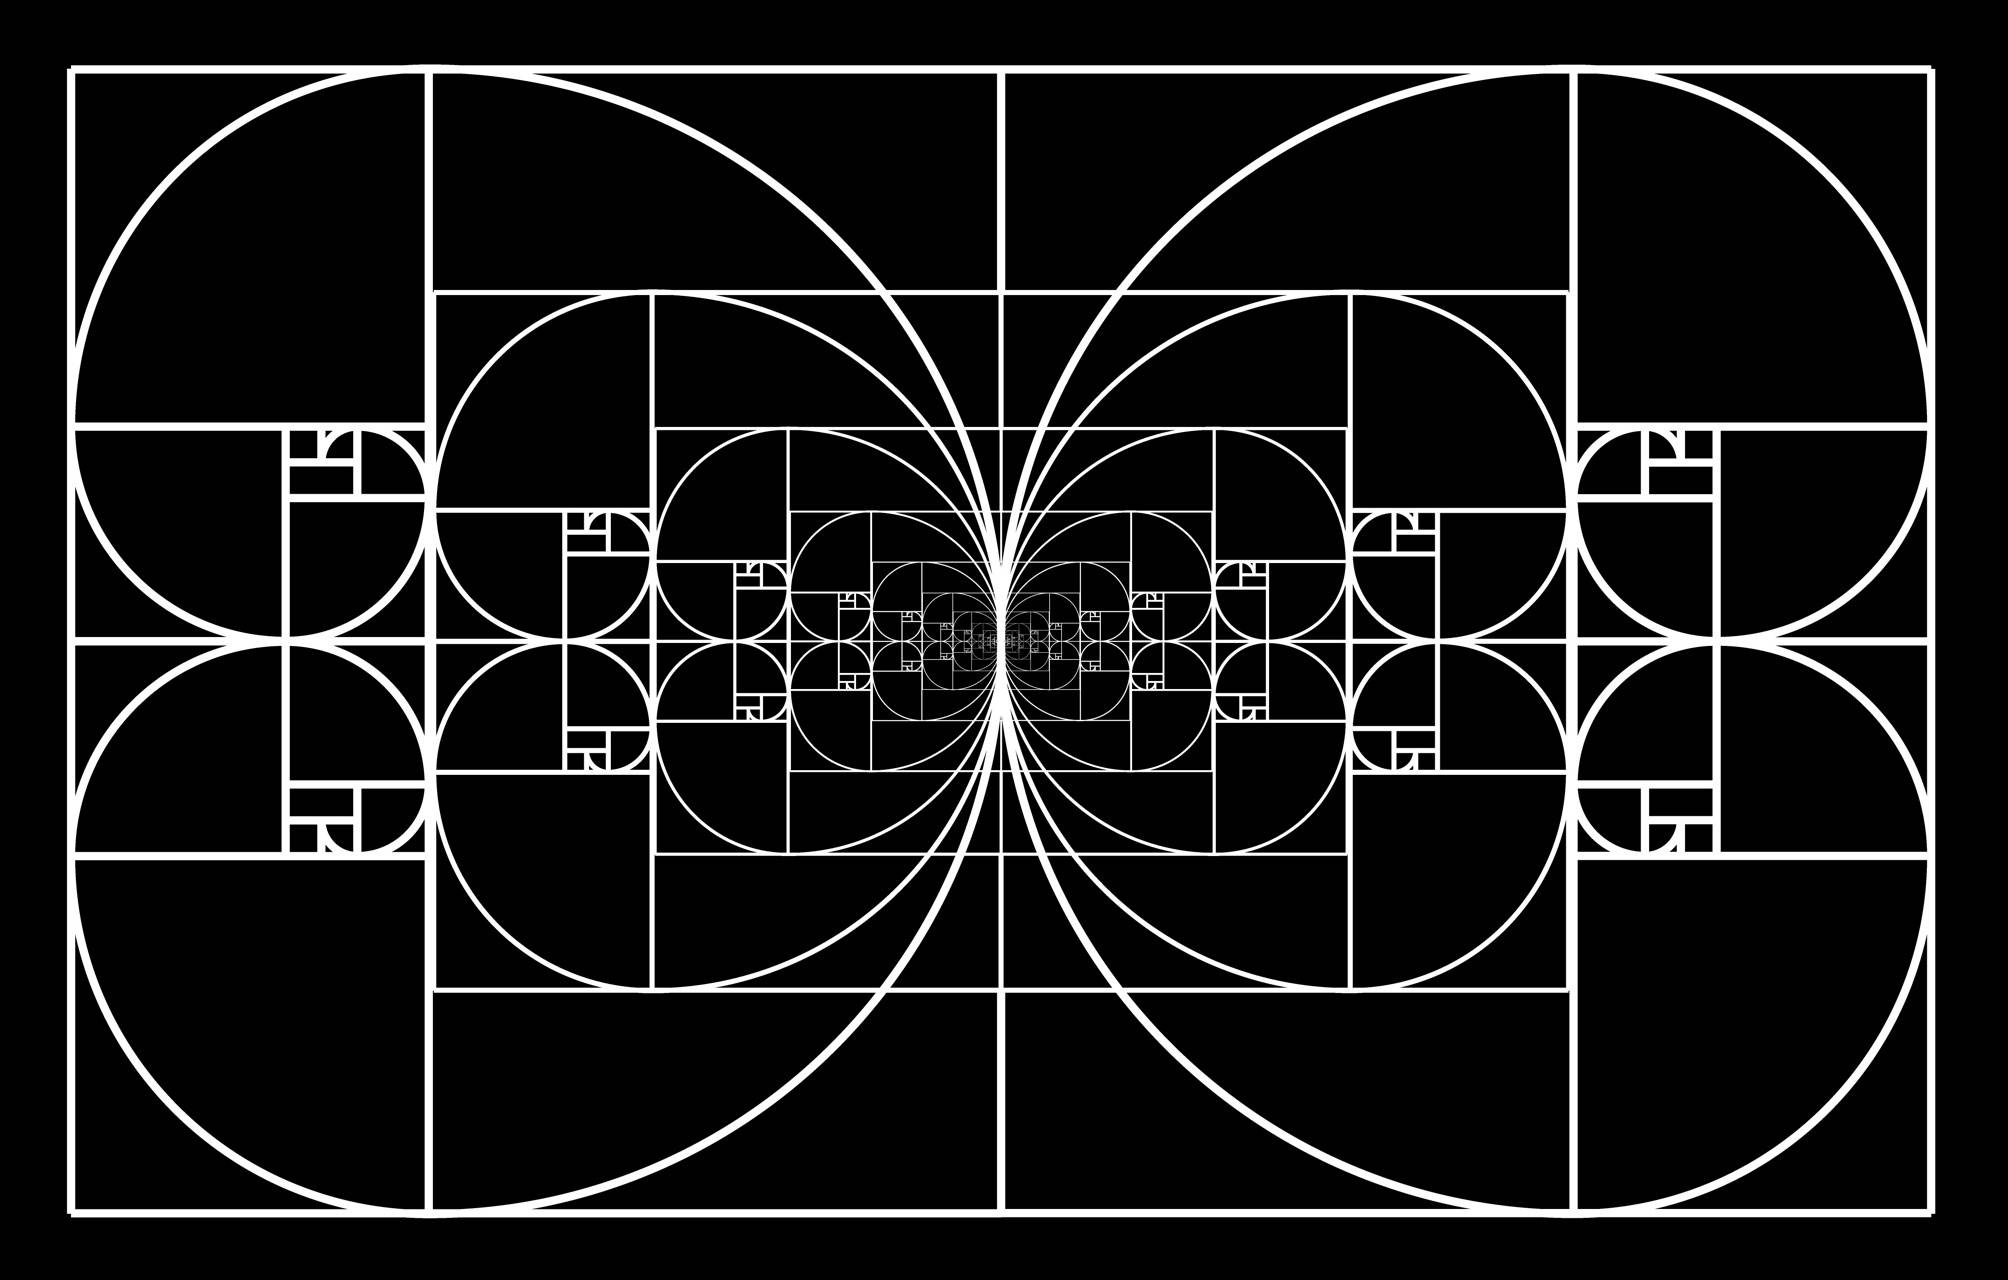 Golden Ratio: Fibonacci spiral, Symmetry section, Correct proportions, Optic illusion. 2010x1280 HD Wallpaper.